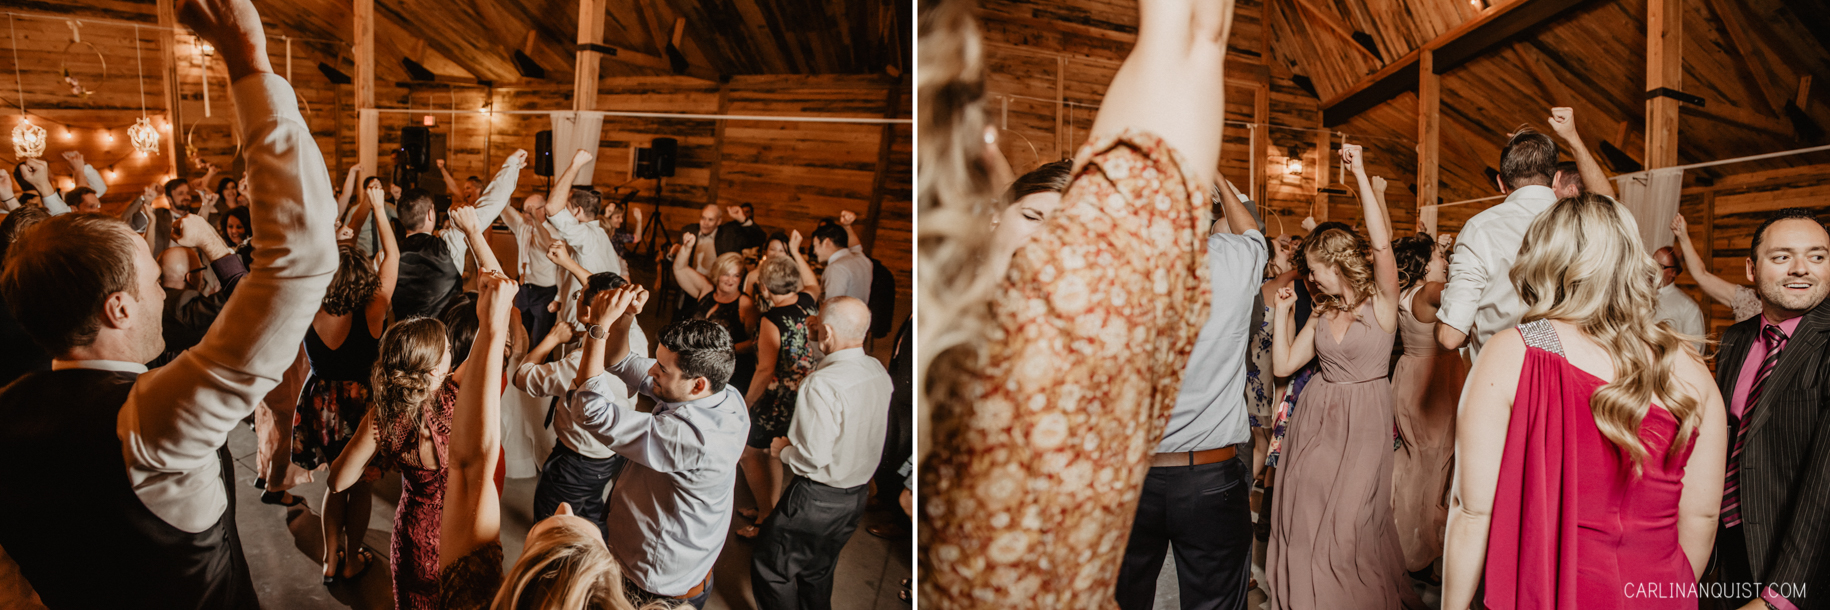 Wedding Dance | Willow Lane Barn Wedding Photos